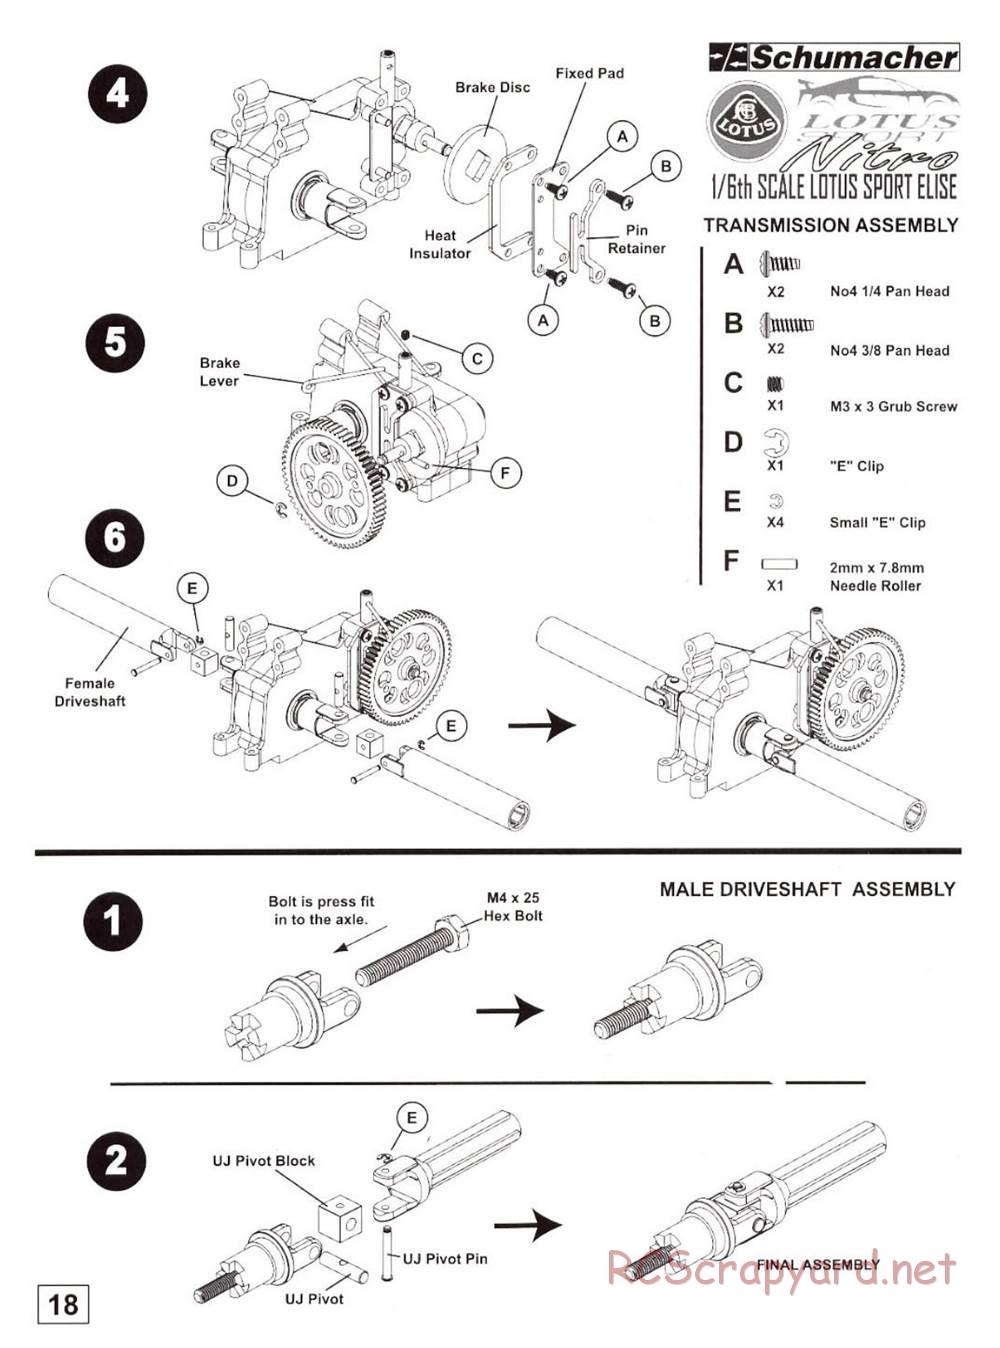 Schumacher - Big 6 Lotus Nitro - Manual - Page 12